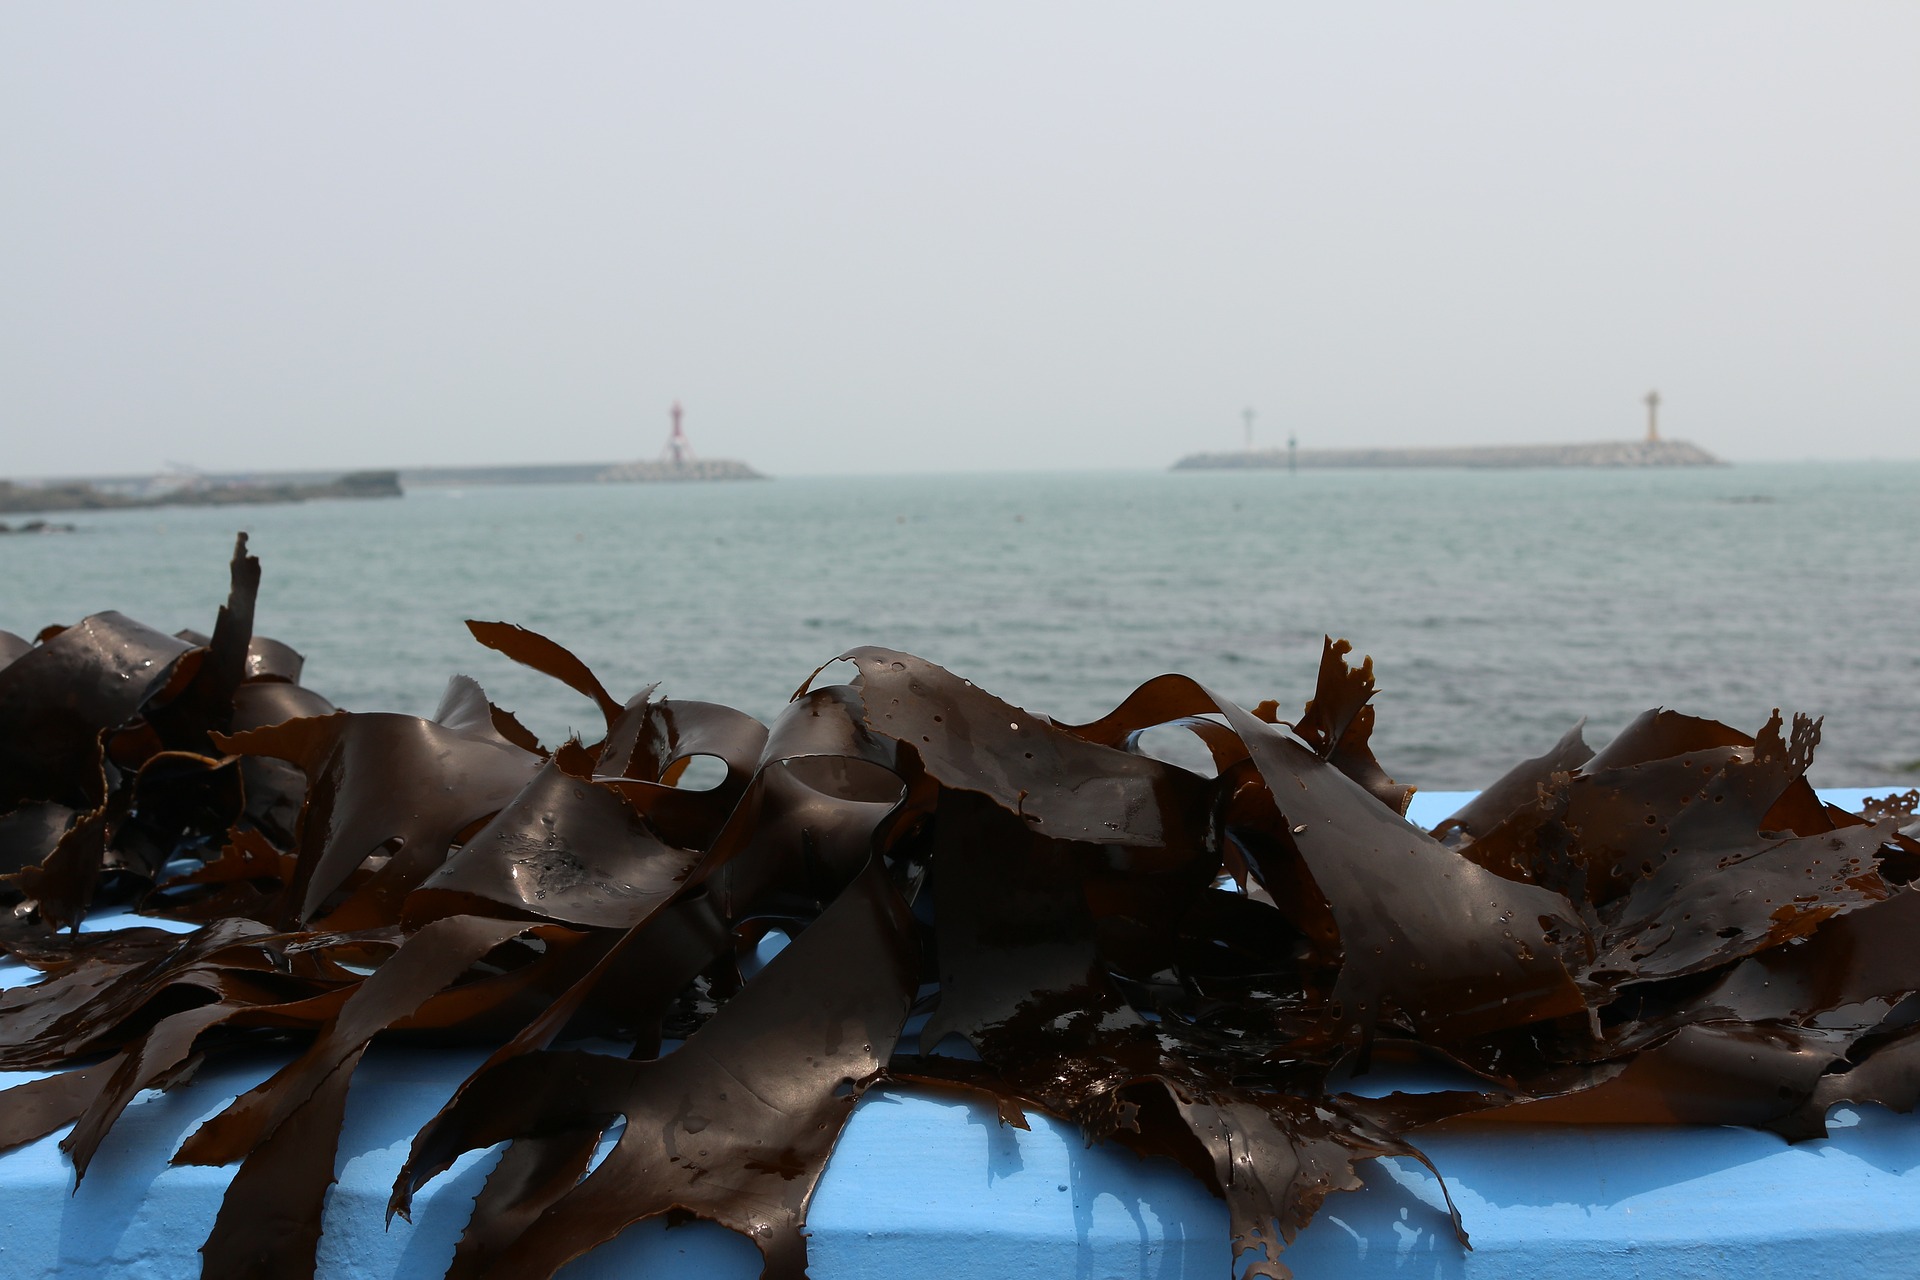 seaweed
미역
미역국